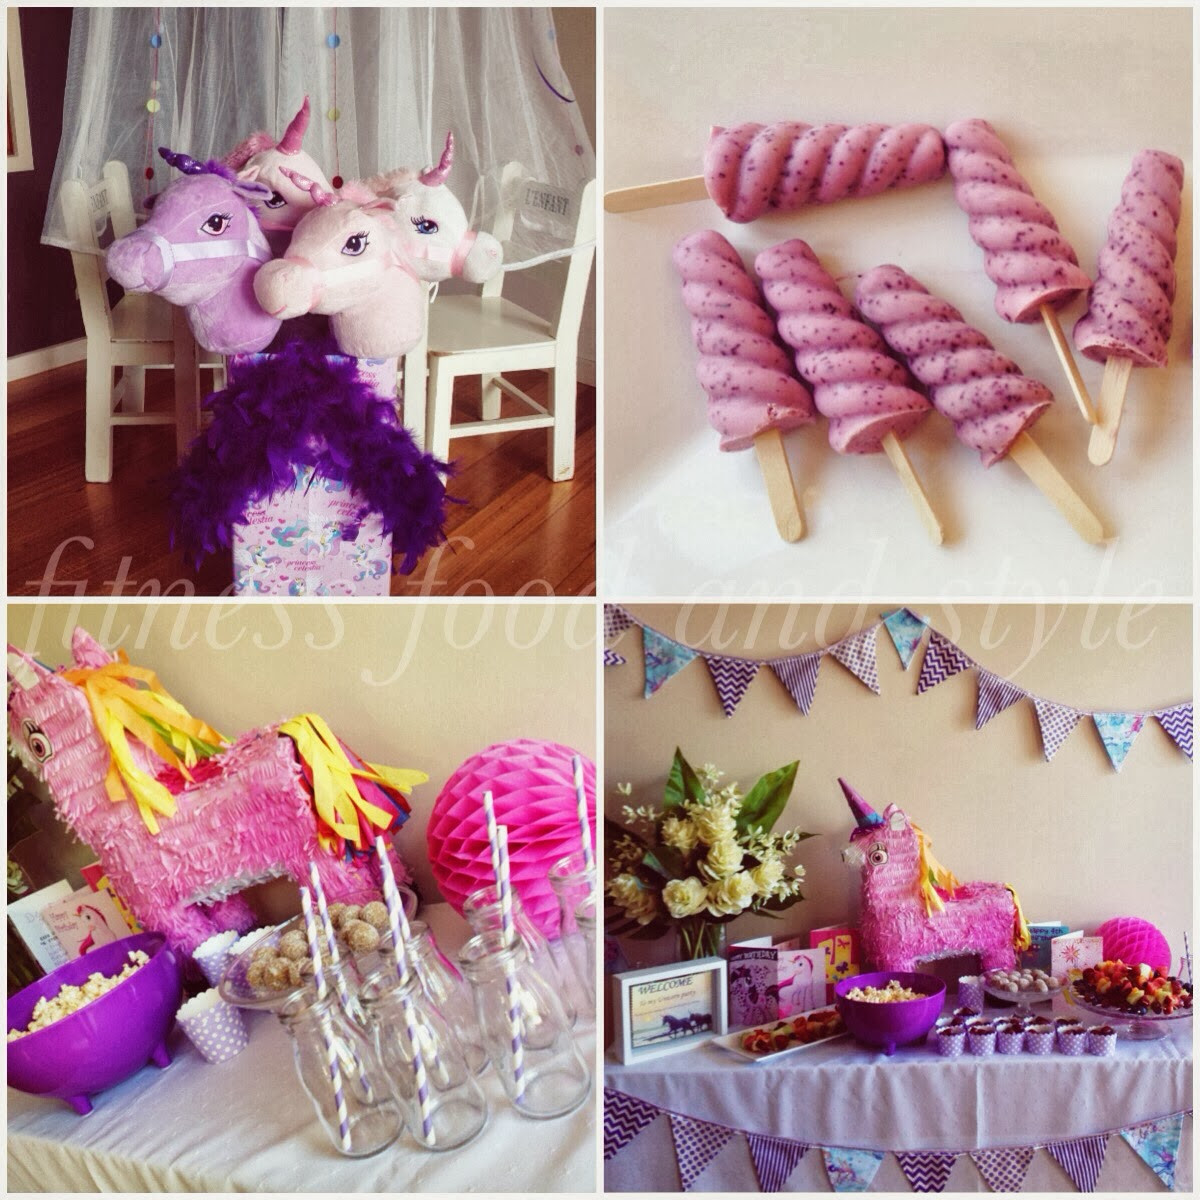 Healthy Unicorn Party Food Ideas
 A healthy Unicorn party for Mietta s 4th birthday